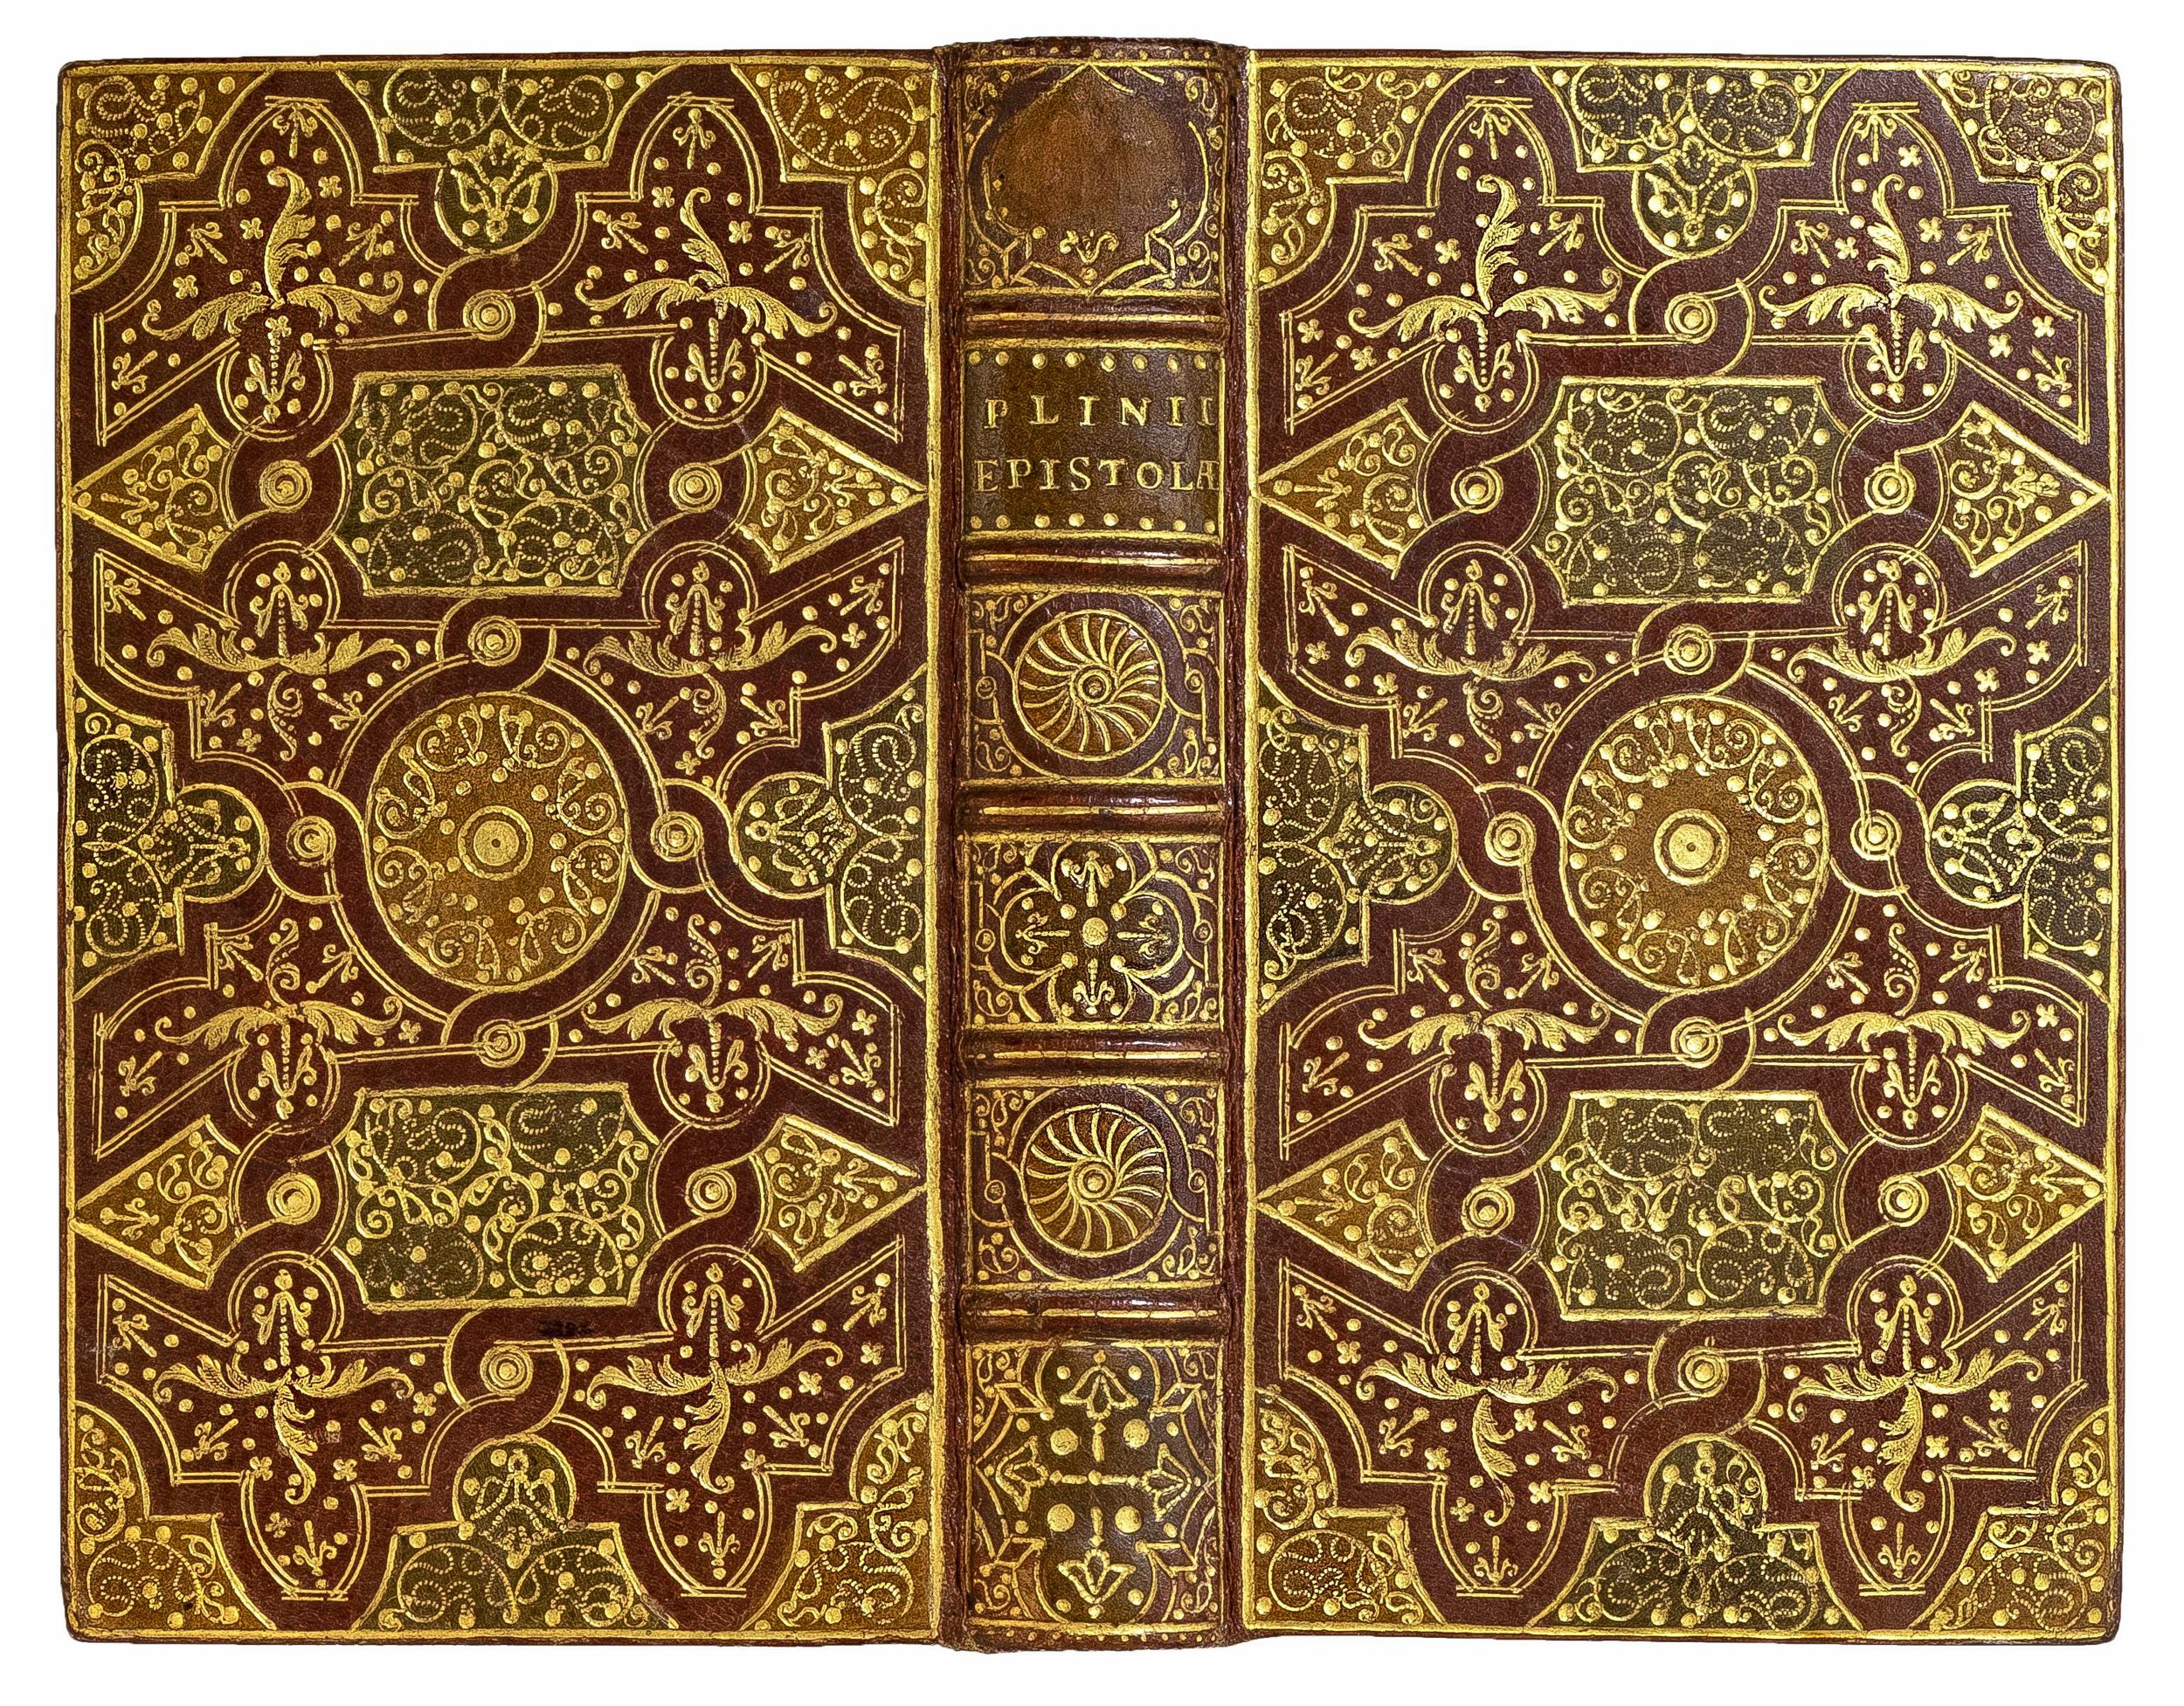 005-padeloup-fanfare-Inlaid-Binding-morocco-mosaic-reliure-maroquin-18th-century.jpg